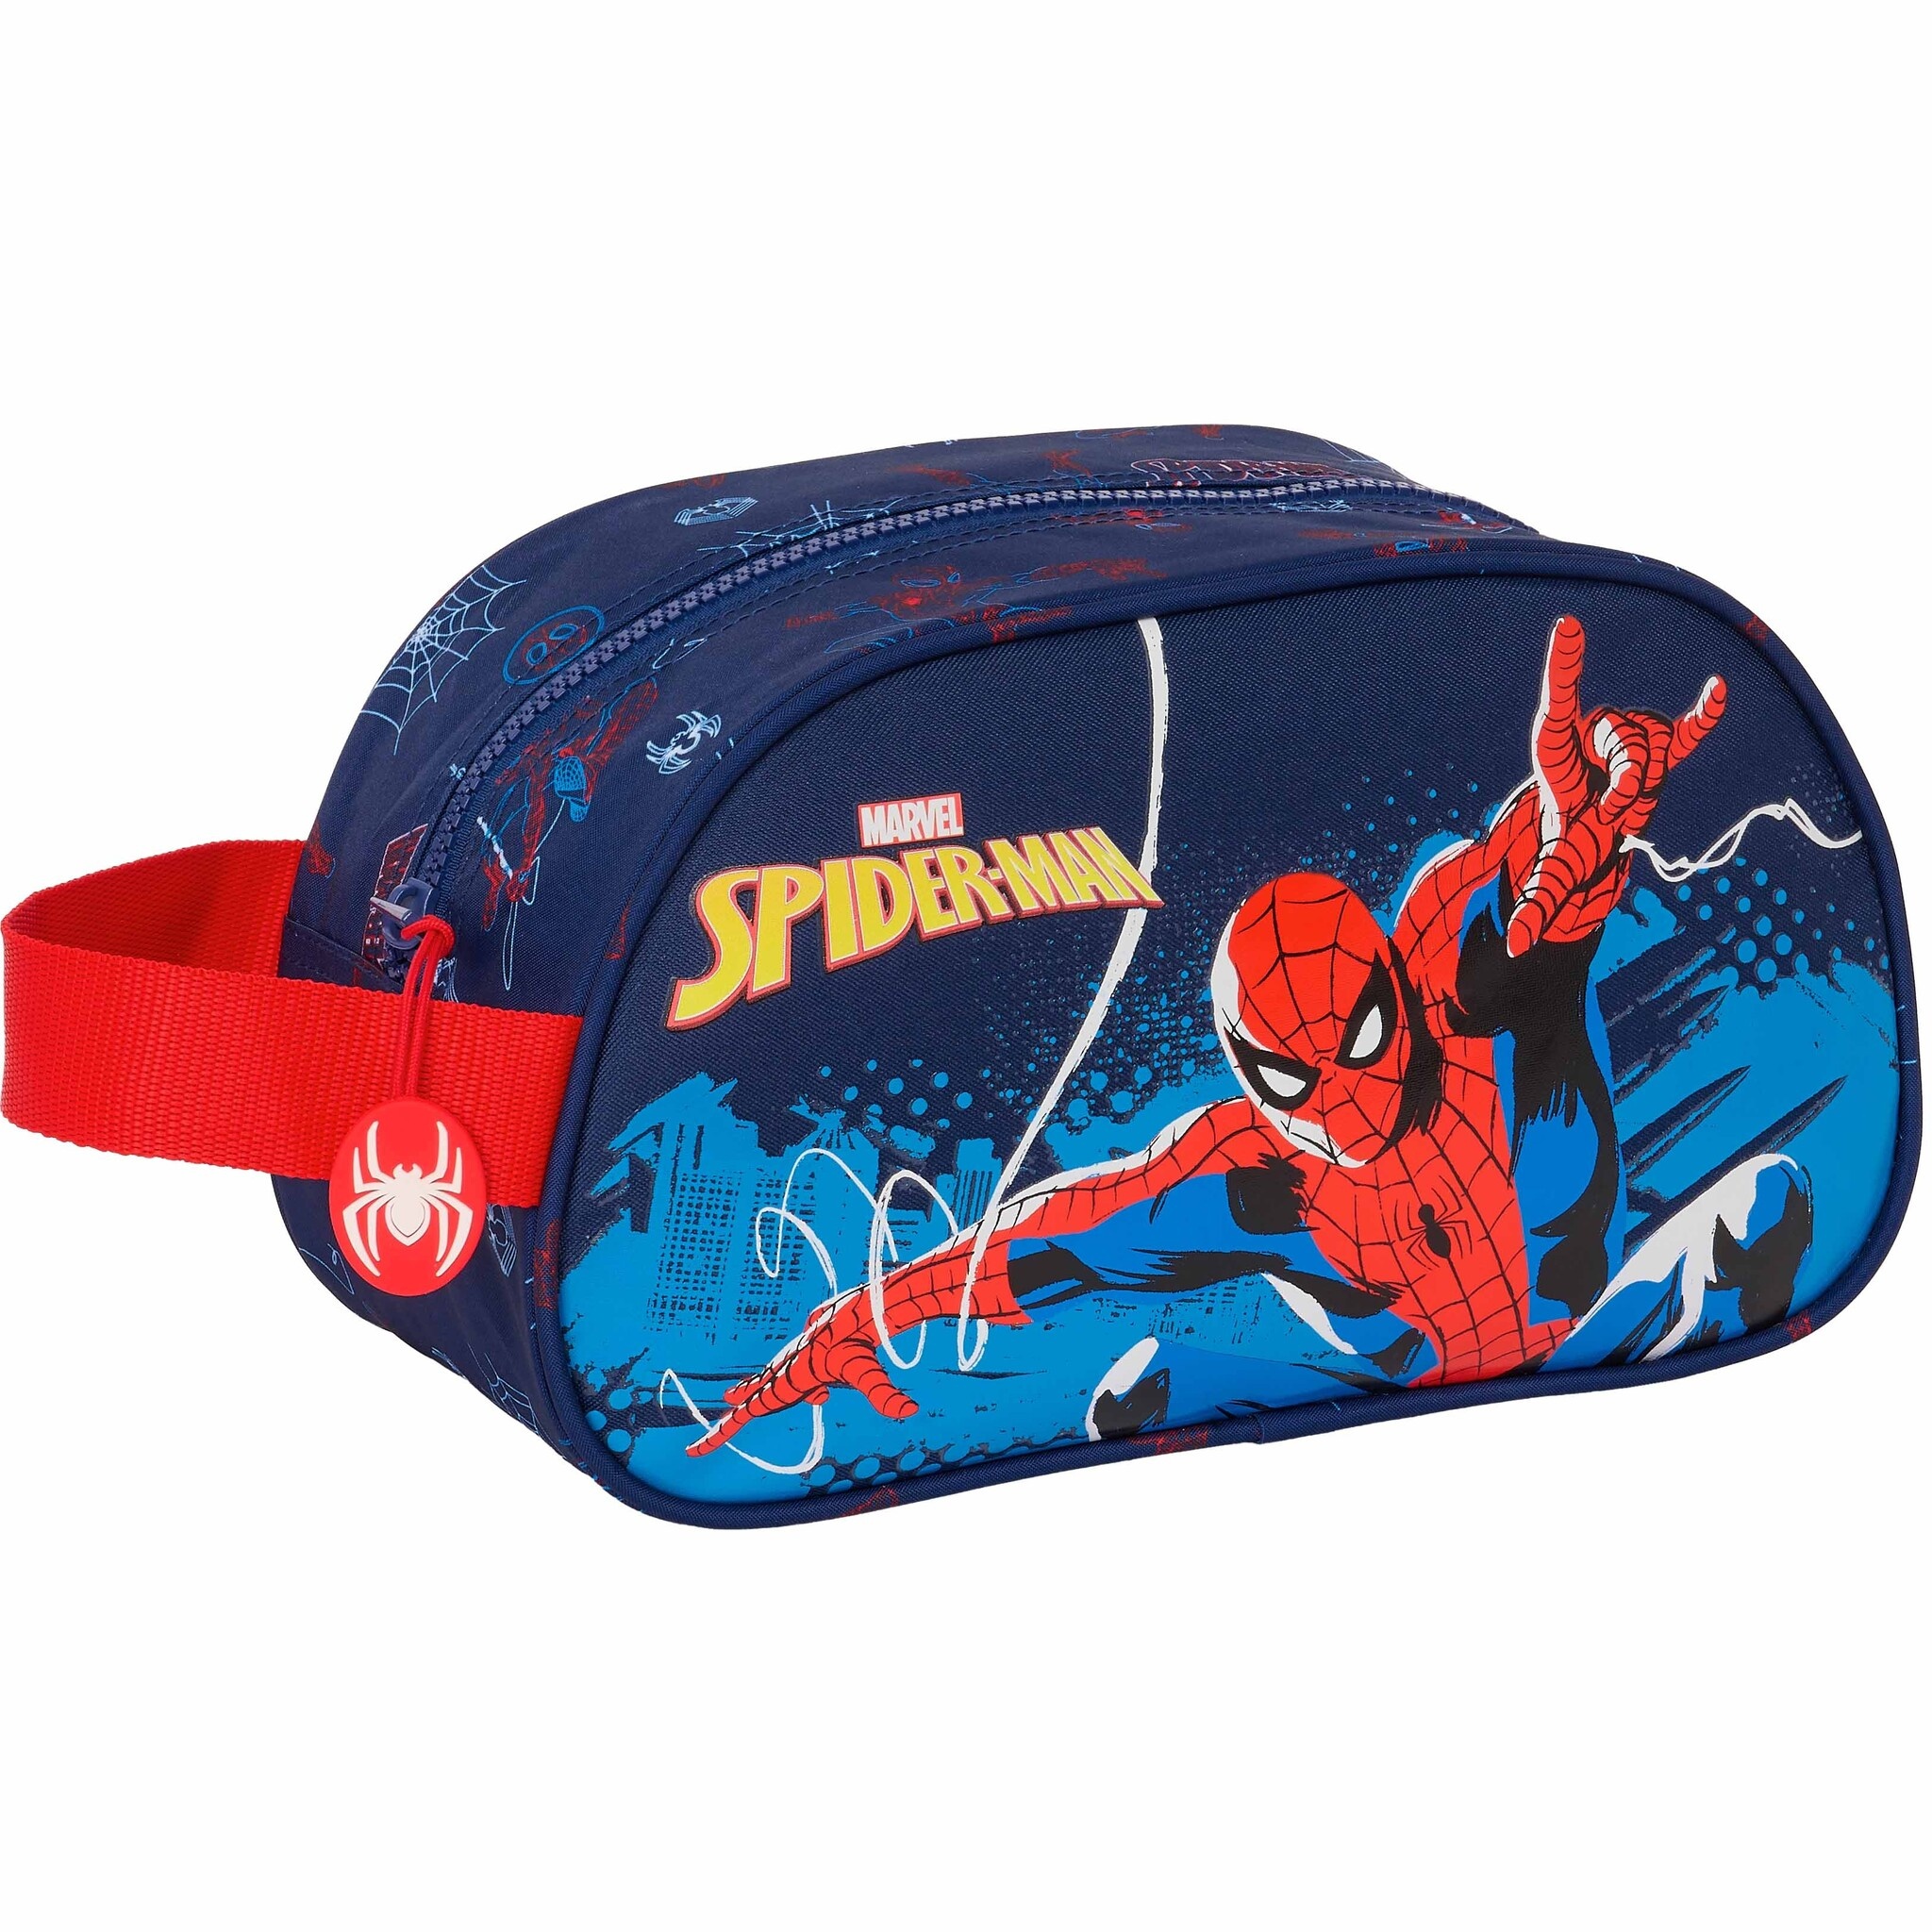 Spiderman Toiletry bag, Web - 26 x 15 x 12 cm - Polyester